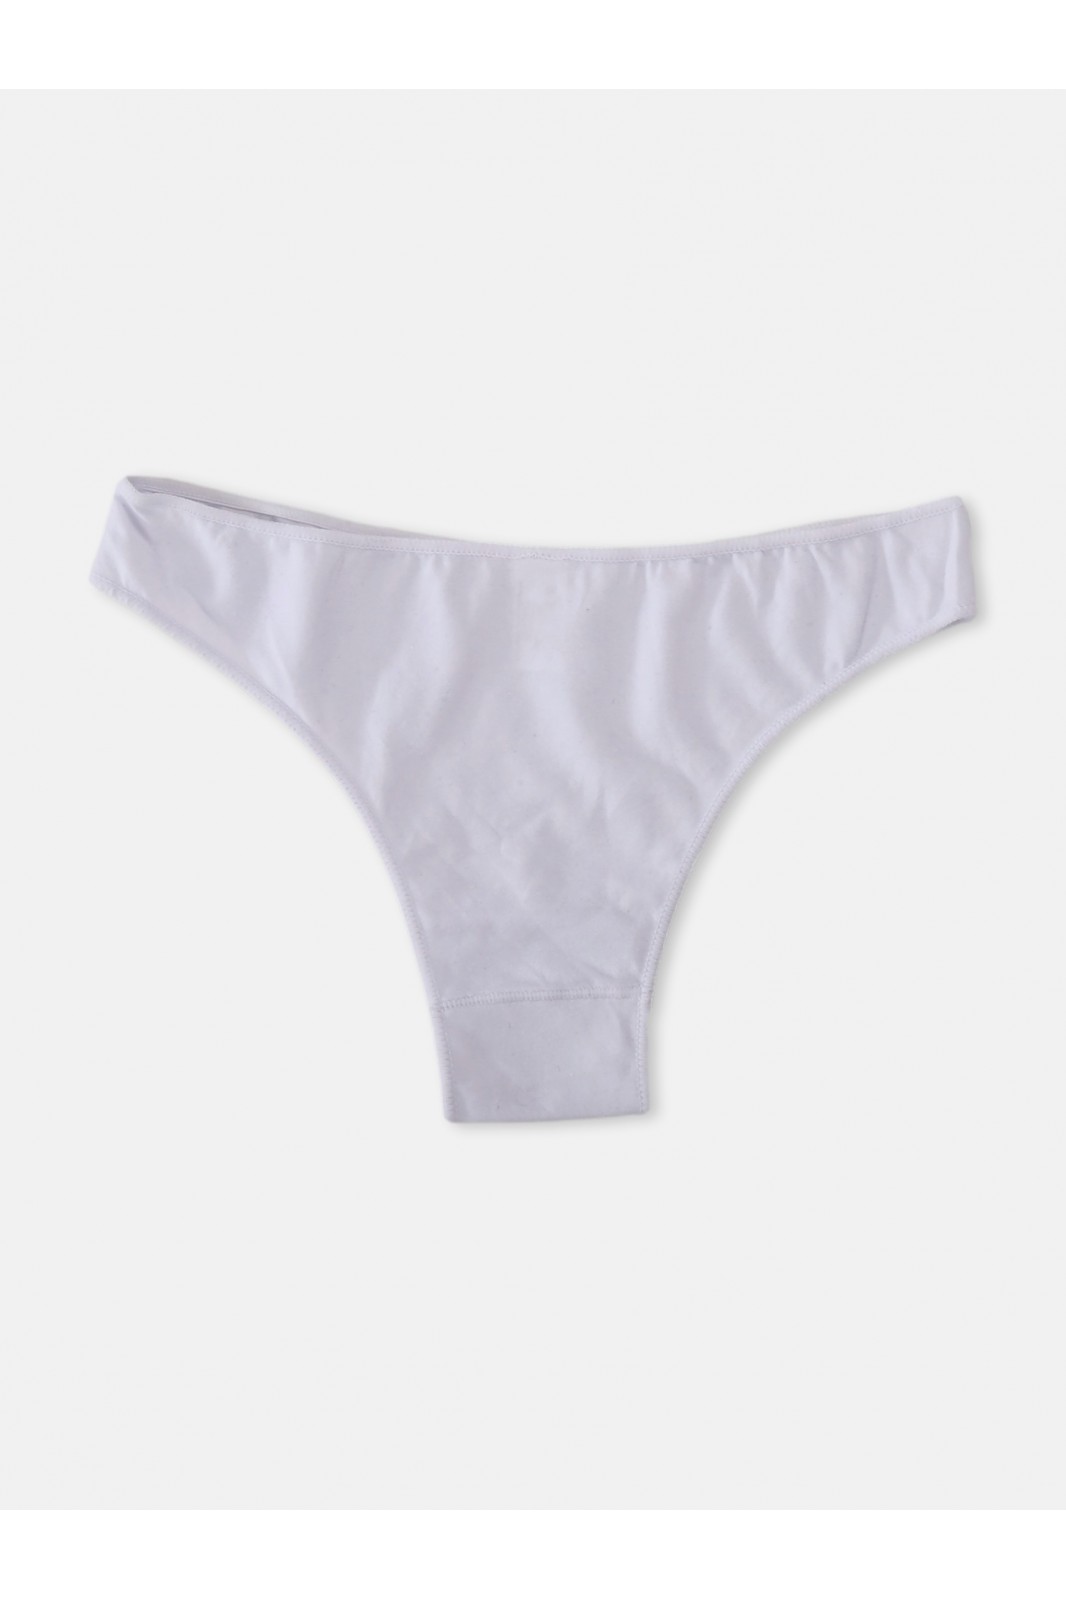 Monochrome brazilian panties - Cotton (5 pieces)